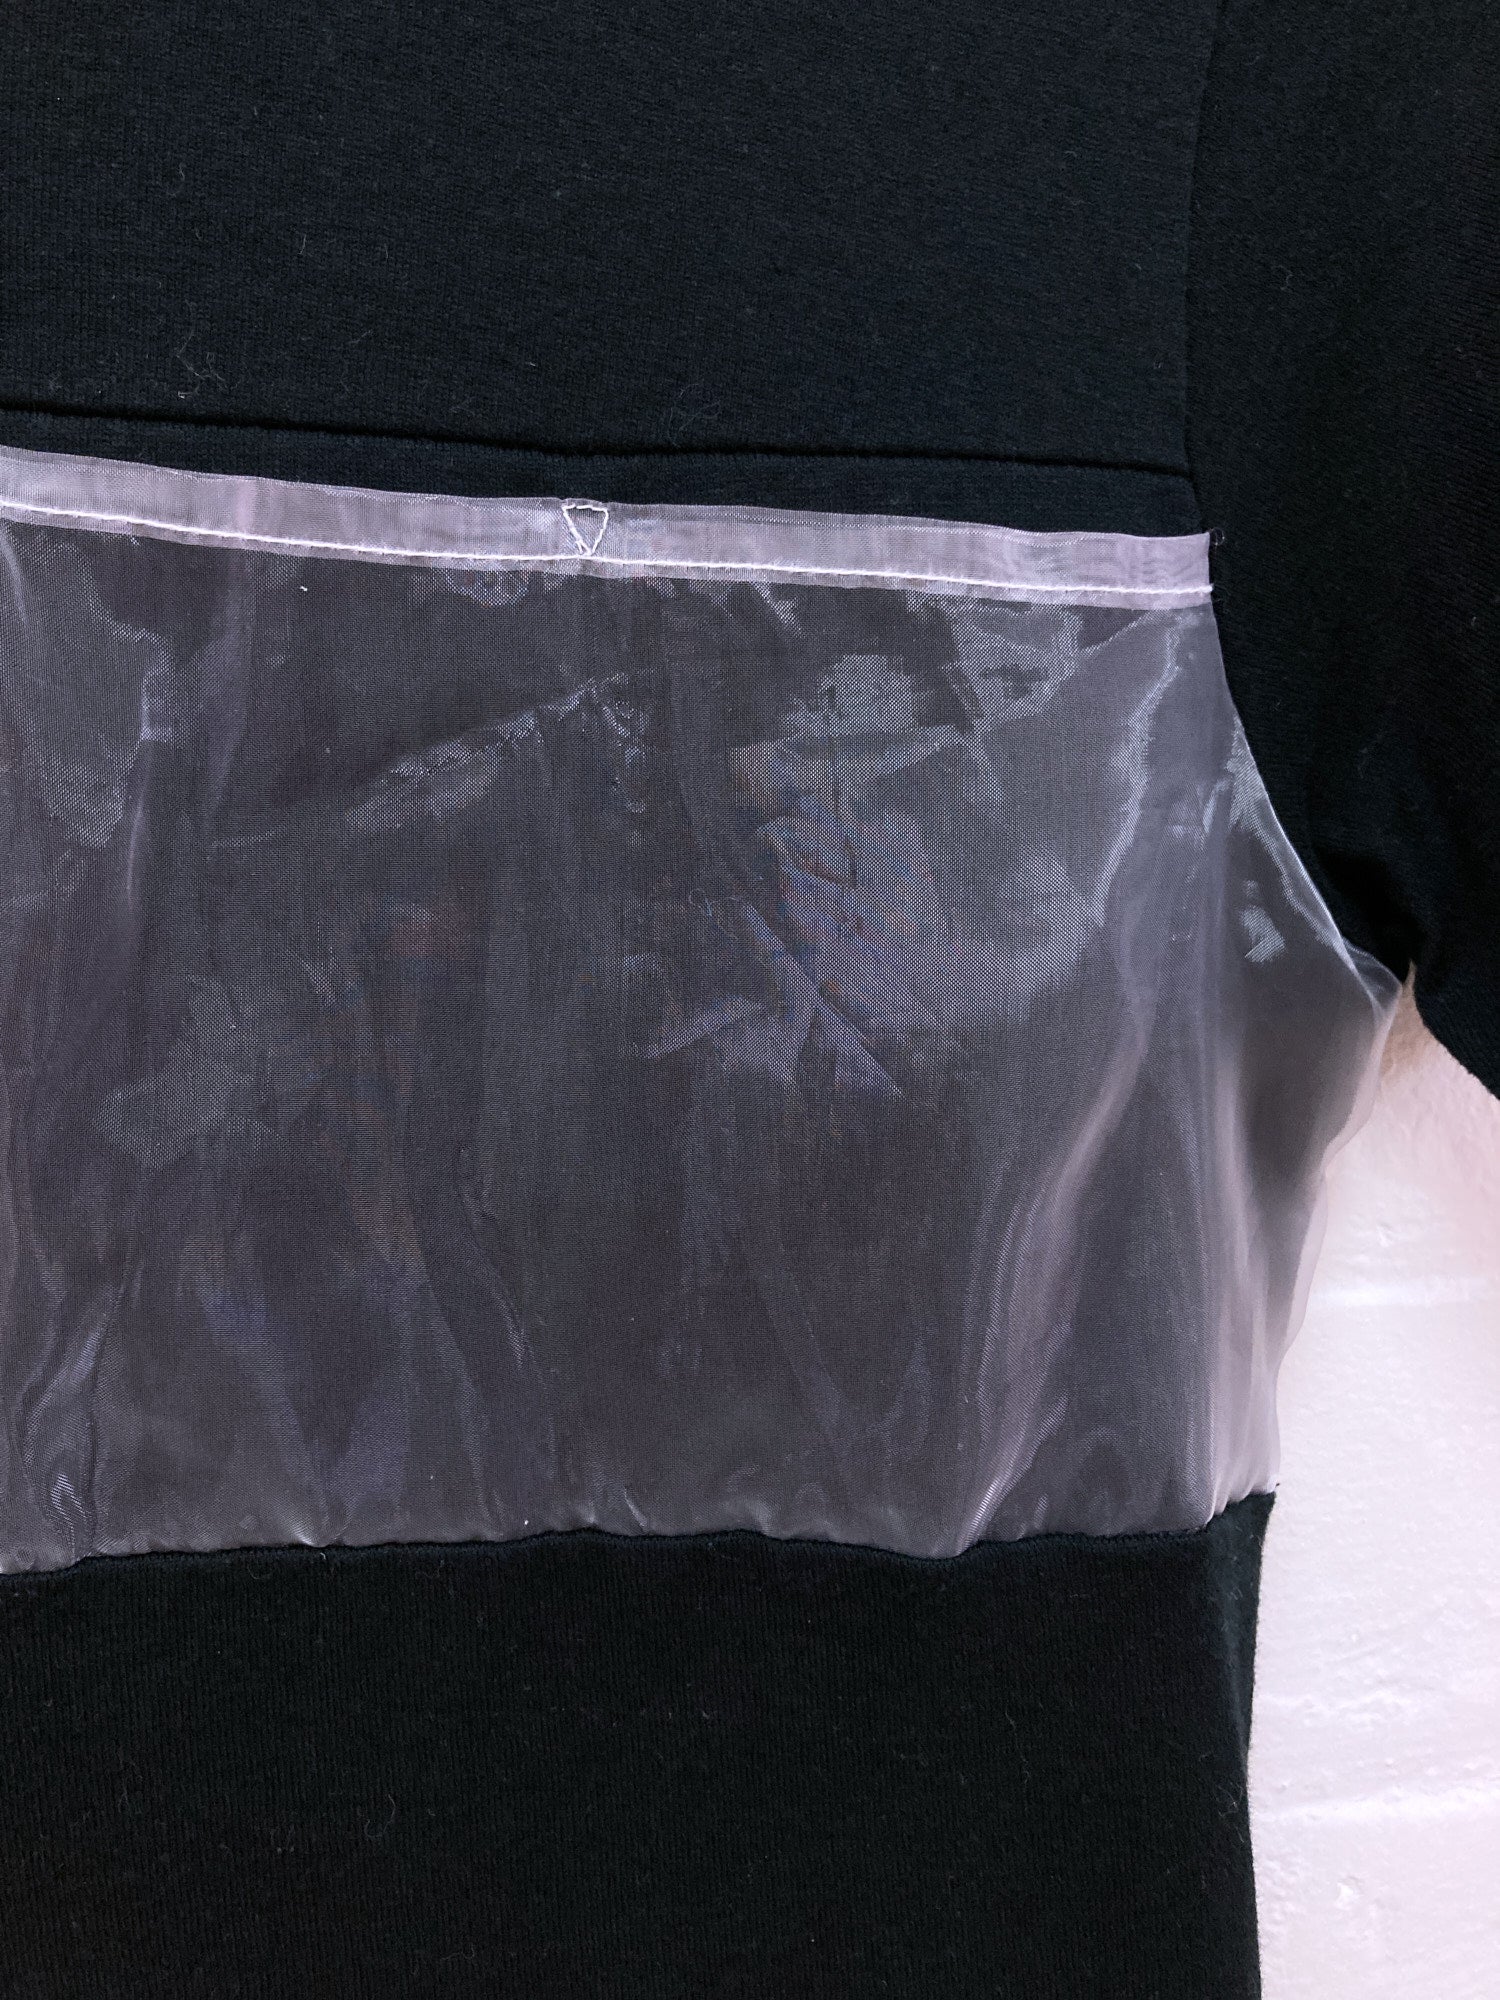 Yoichi Nagasawa 1990s black cotton t-shirt with sheer organza chest pocket